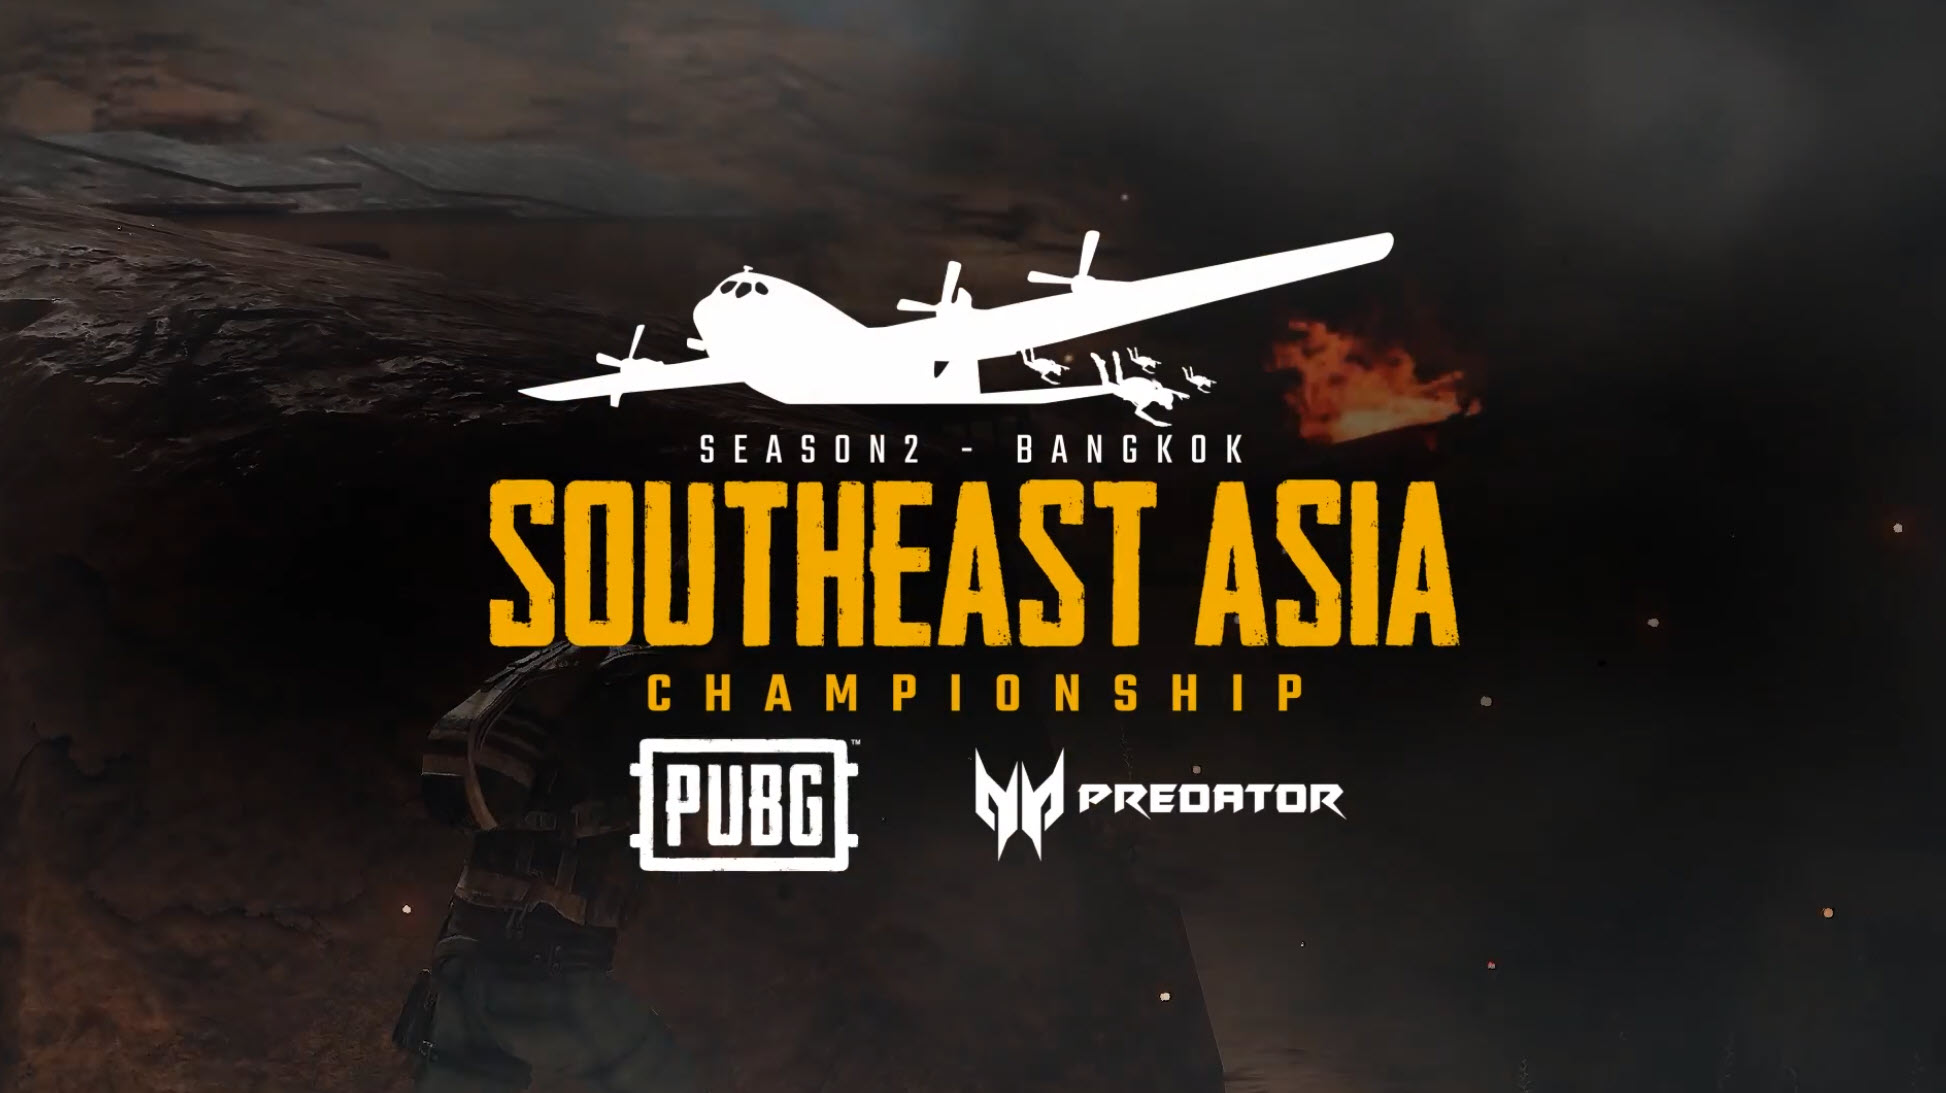 2019 06 28 18 18 13 PUBG SEA Championship Season 2 Sponsored By Predator and Intel การแข่งขันระดับเกม PubG ระดับ Southeast Asia สุดมันส์ เชียร์ทีมไทย แบบติดขอบสนามแข่ง และลุ้น รางวัลอีกเพียบ